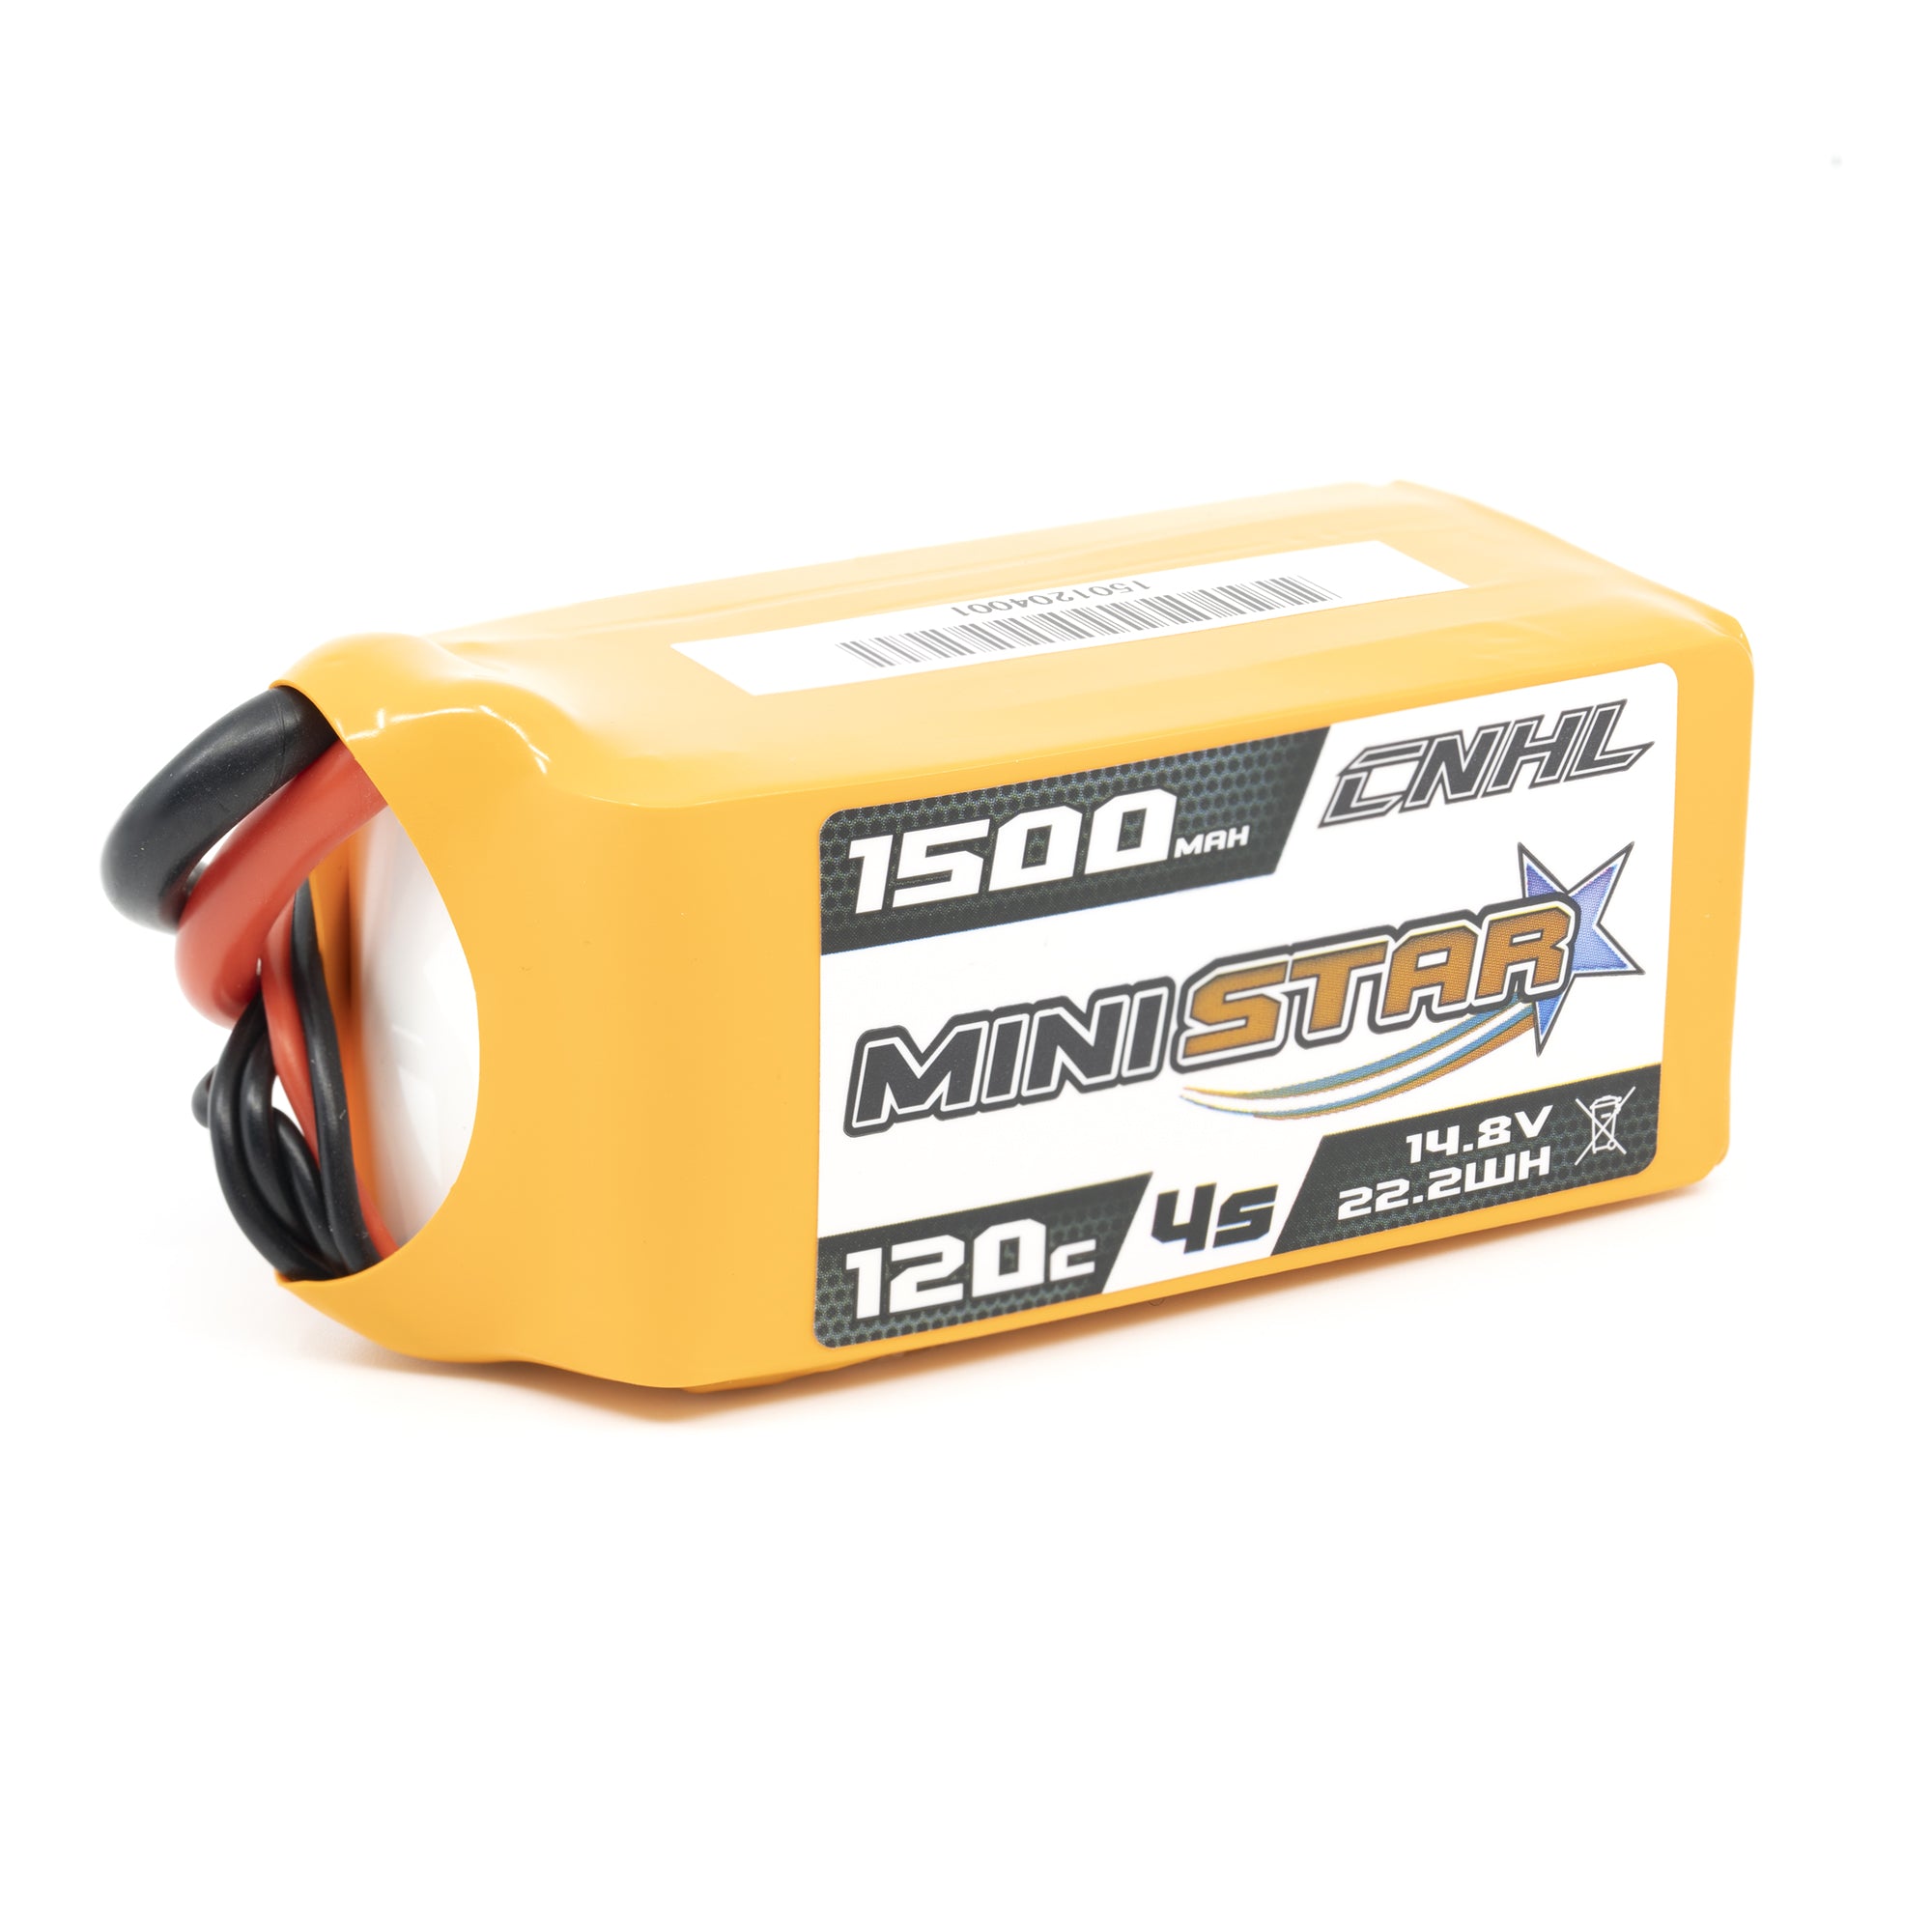 Chinahobbyline CNHL Ministar 1500mAh 4s 120c Lipo Battery [DG]